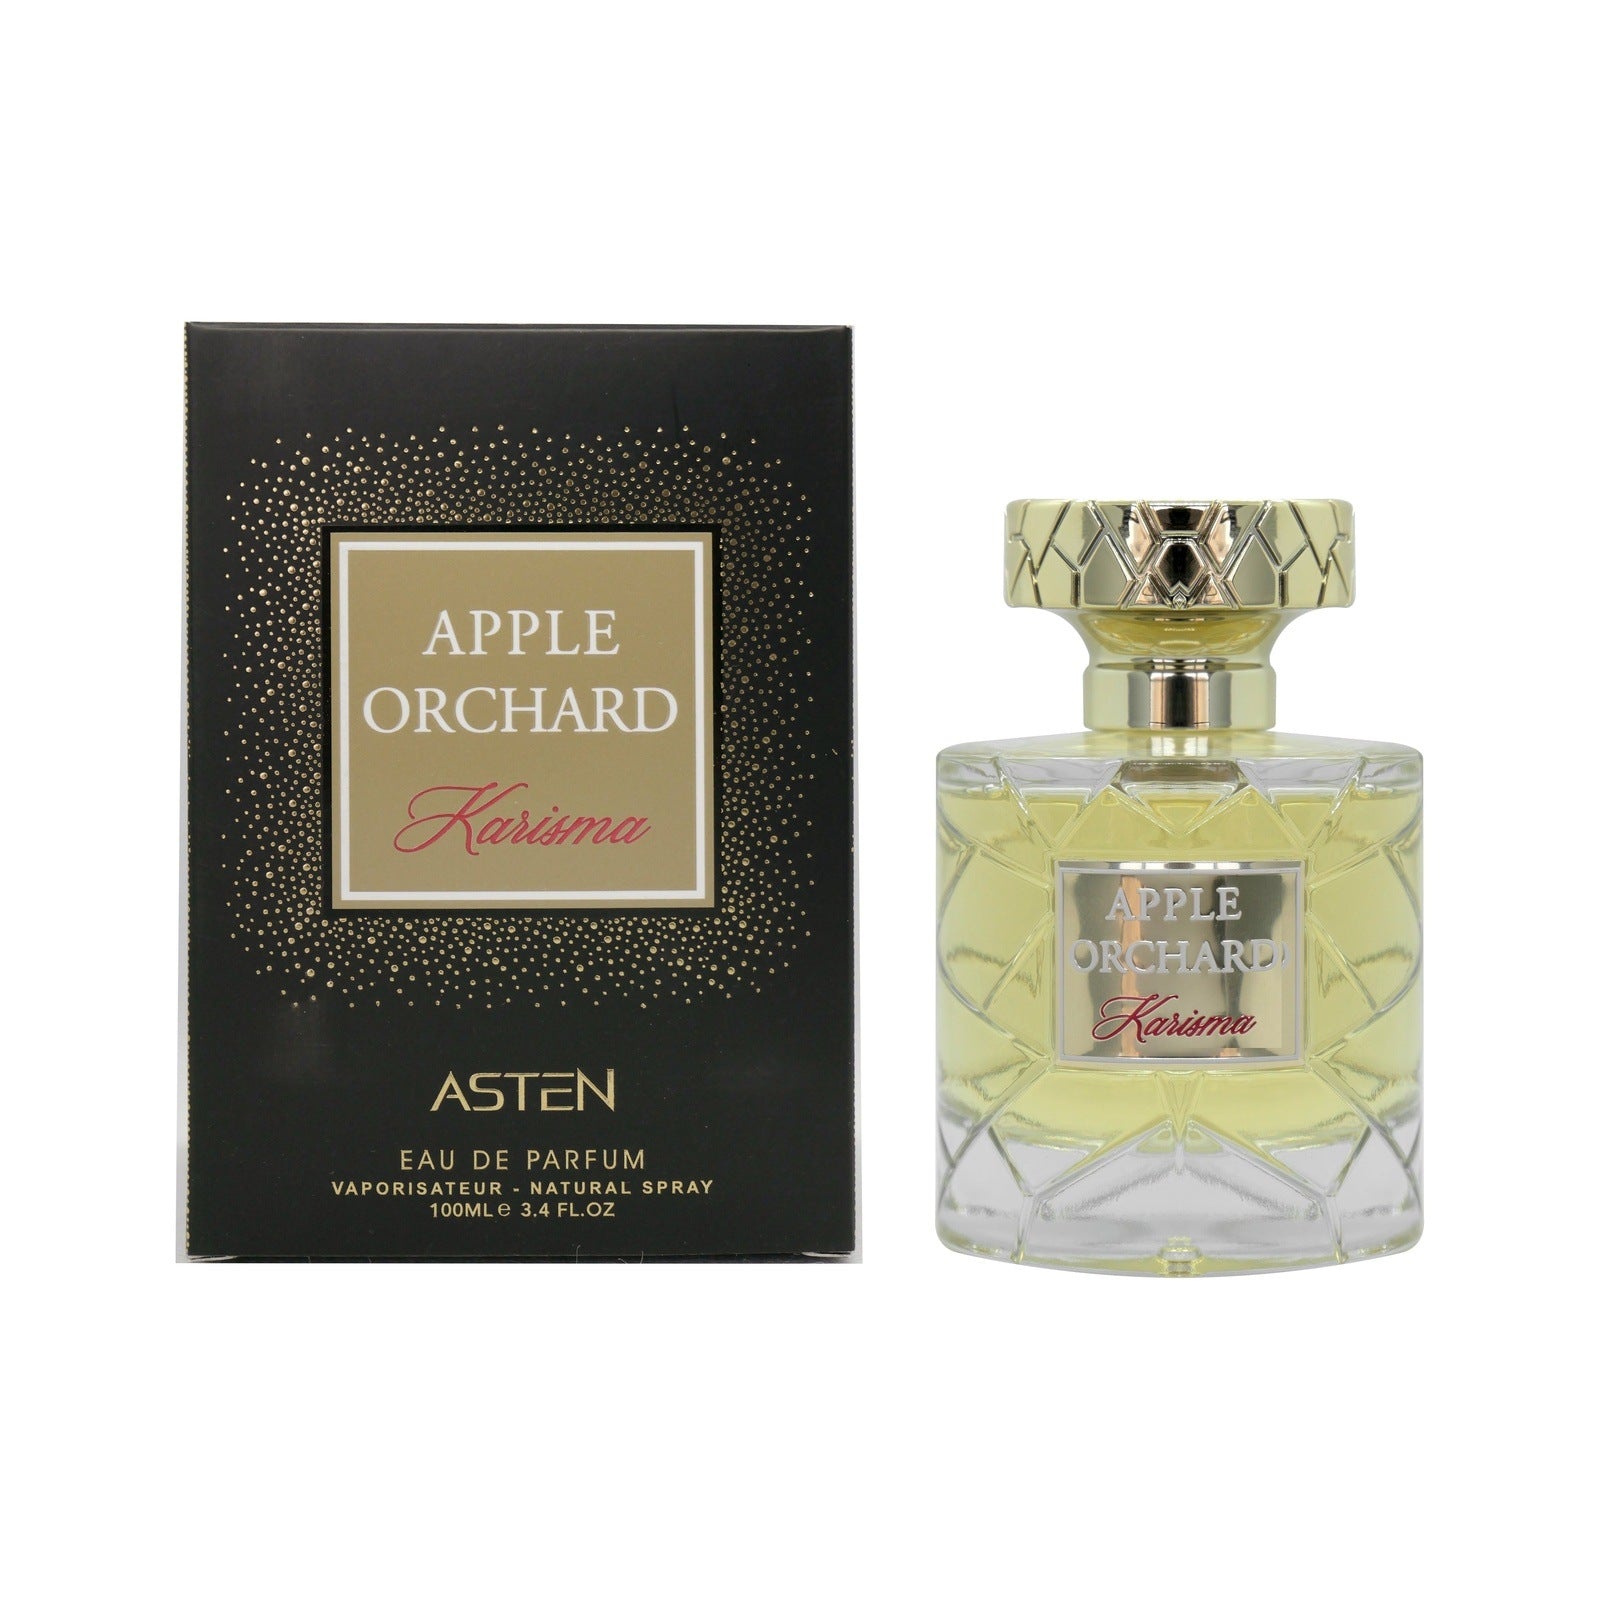 Apple Orchard Karisma EDP - 100Ml 3.4Oz By Asten